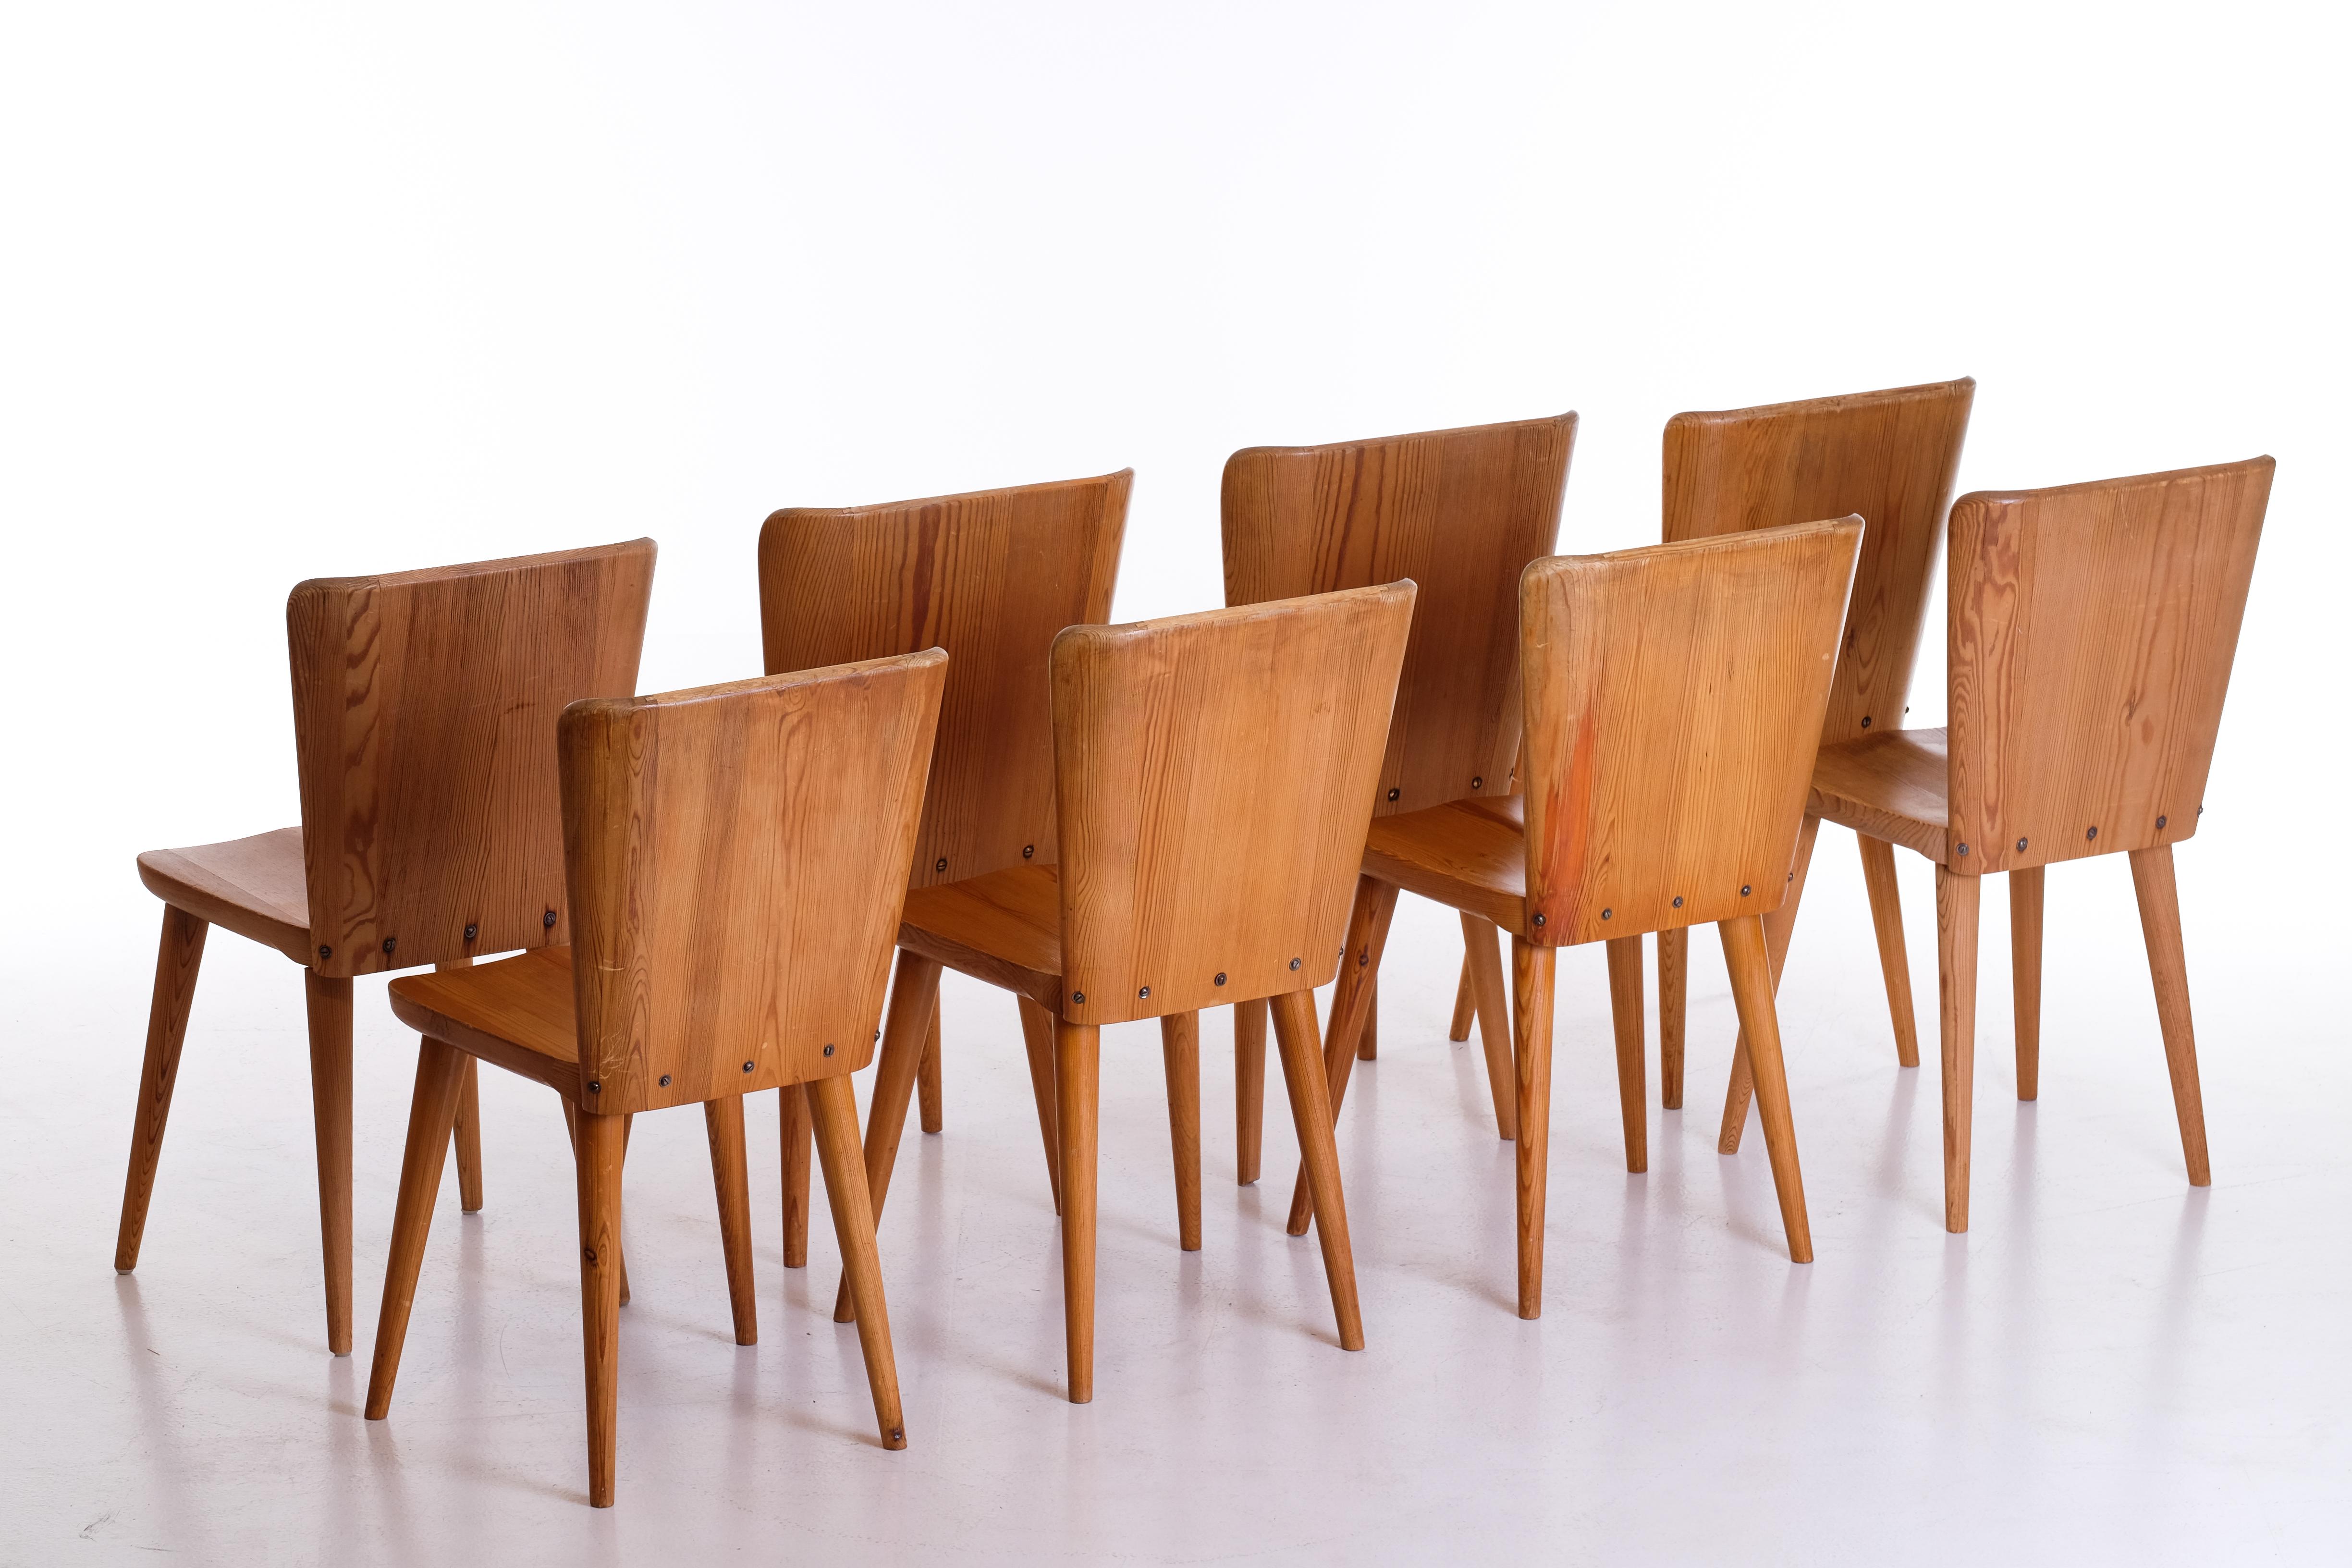 Scandinavian Modern Set of 8 Swedish Pine Chairs by Göran Malmvall, Svensk Fur, 1950s For Sale